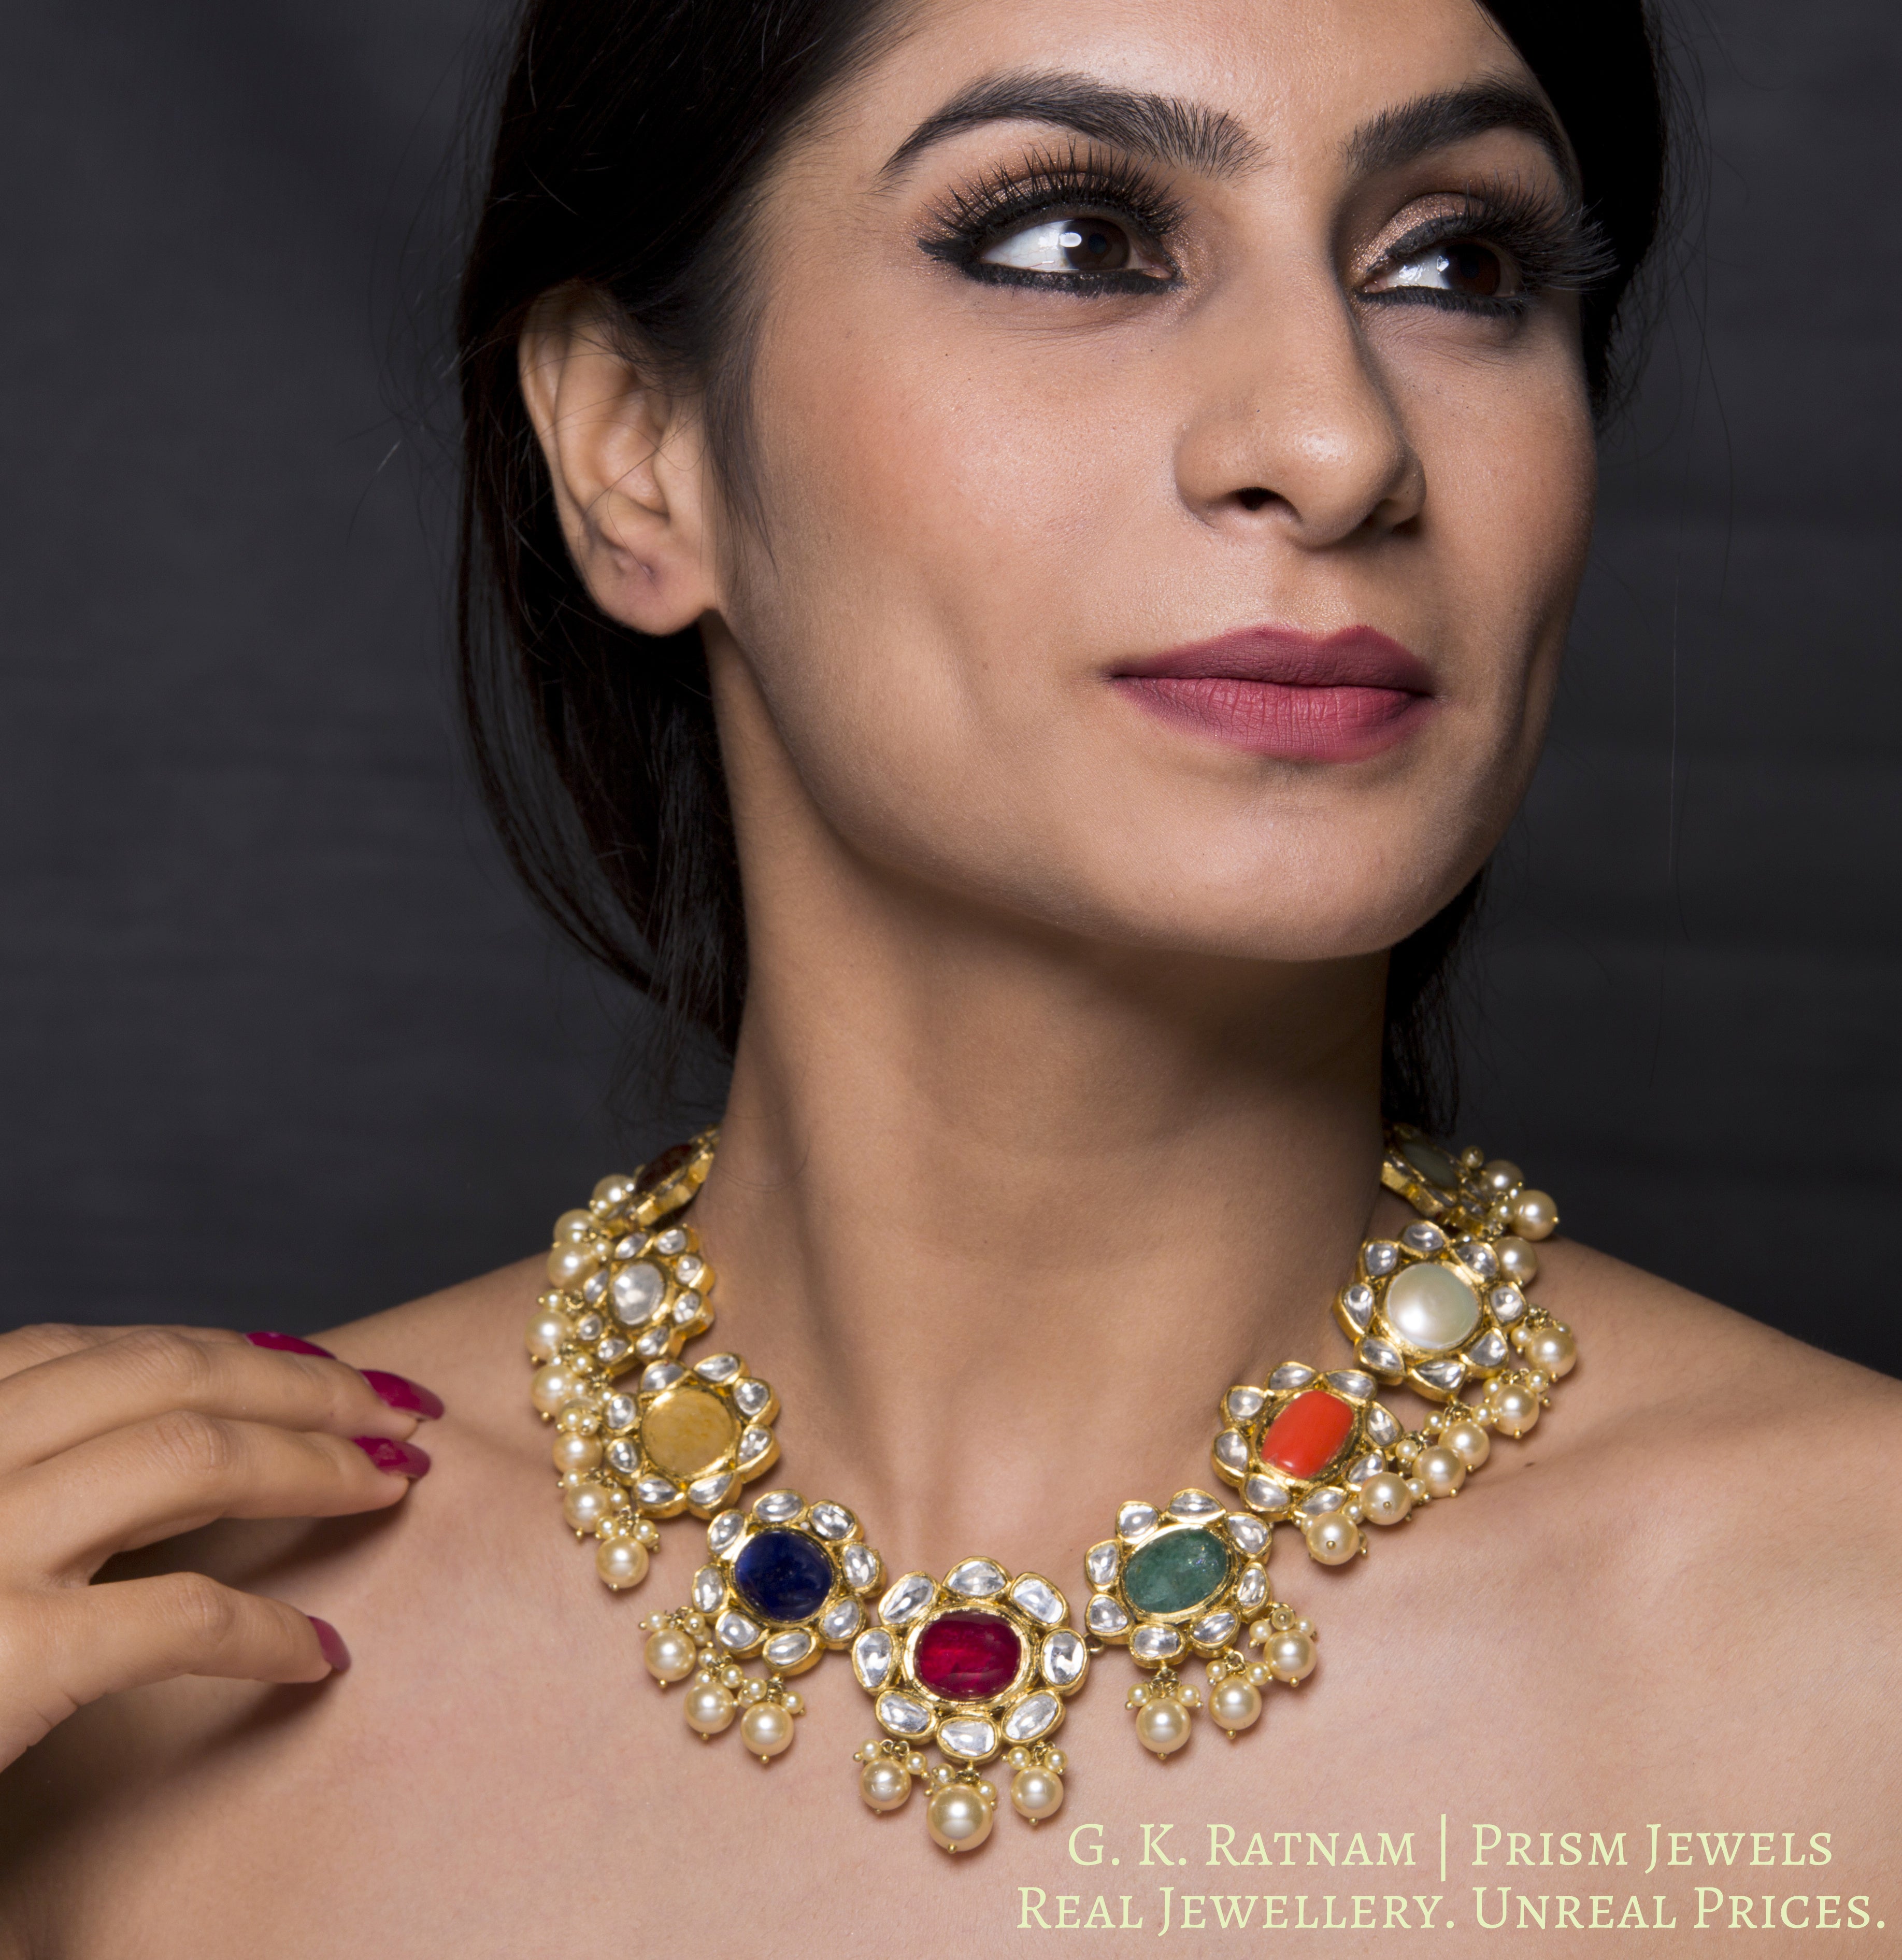 18k Gold and Diamond Polki Navratna Necklace with lustrous pearls - G. K. Ratnam